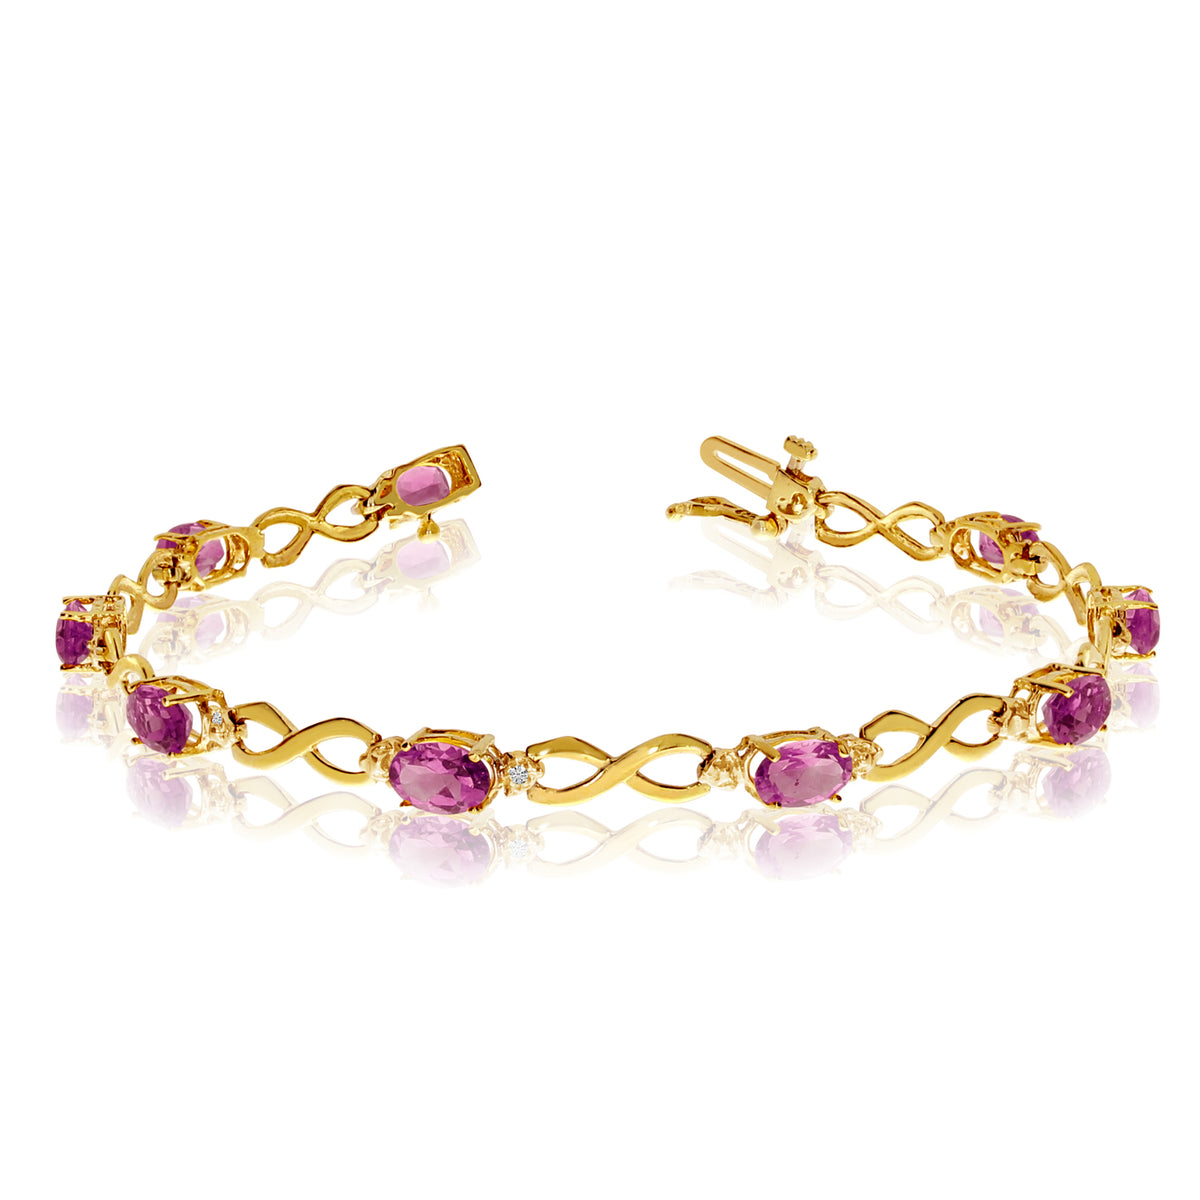 10K Yellow Gold Oval Pink Topaz Stones And Diamonds Infinity Tennis Bracelet, 7" fine designer jewelry for men and women